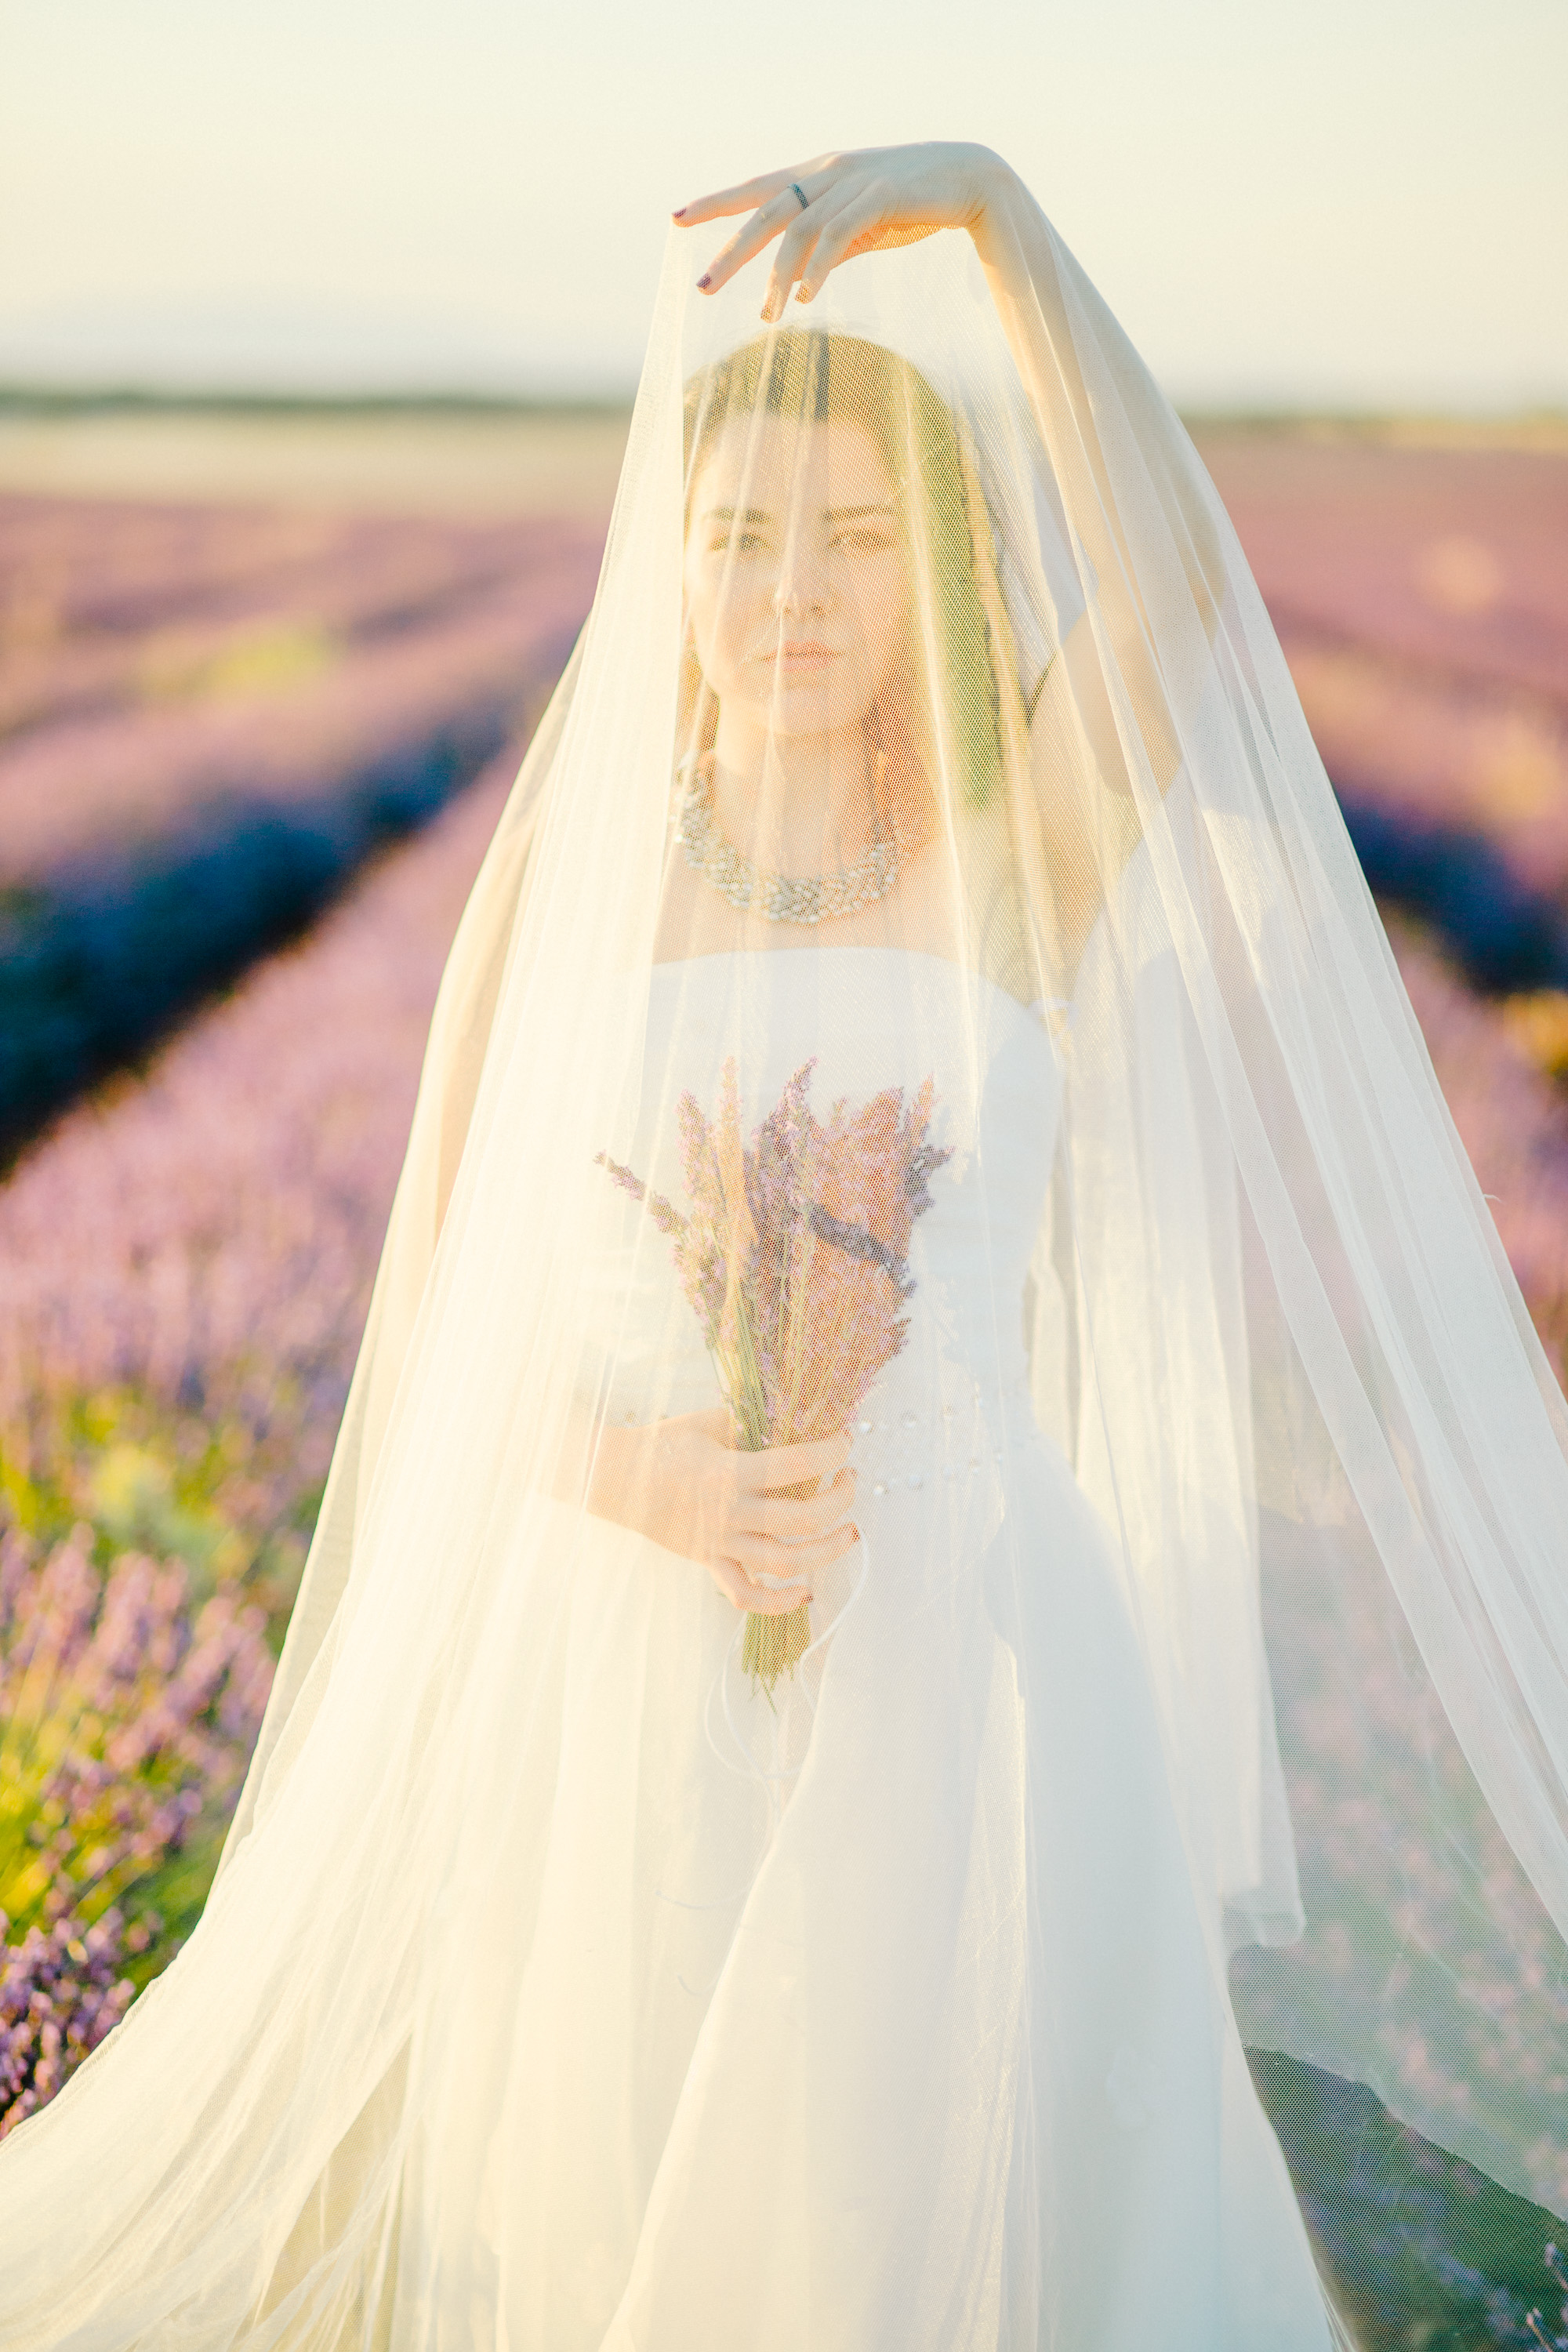 Lavender Field Engagement Photos - Guadalajara Spain Lavender Field - Alla Yachkulo Photography -- Wedding Blog-The Overwhelmed Bride